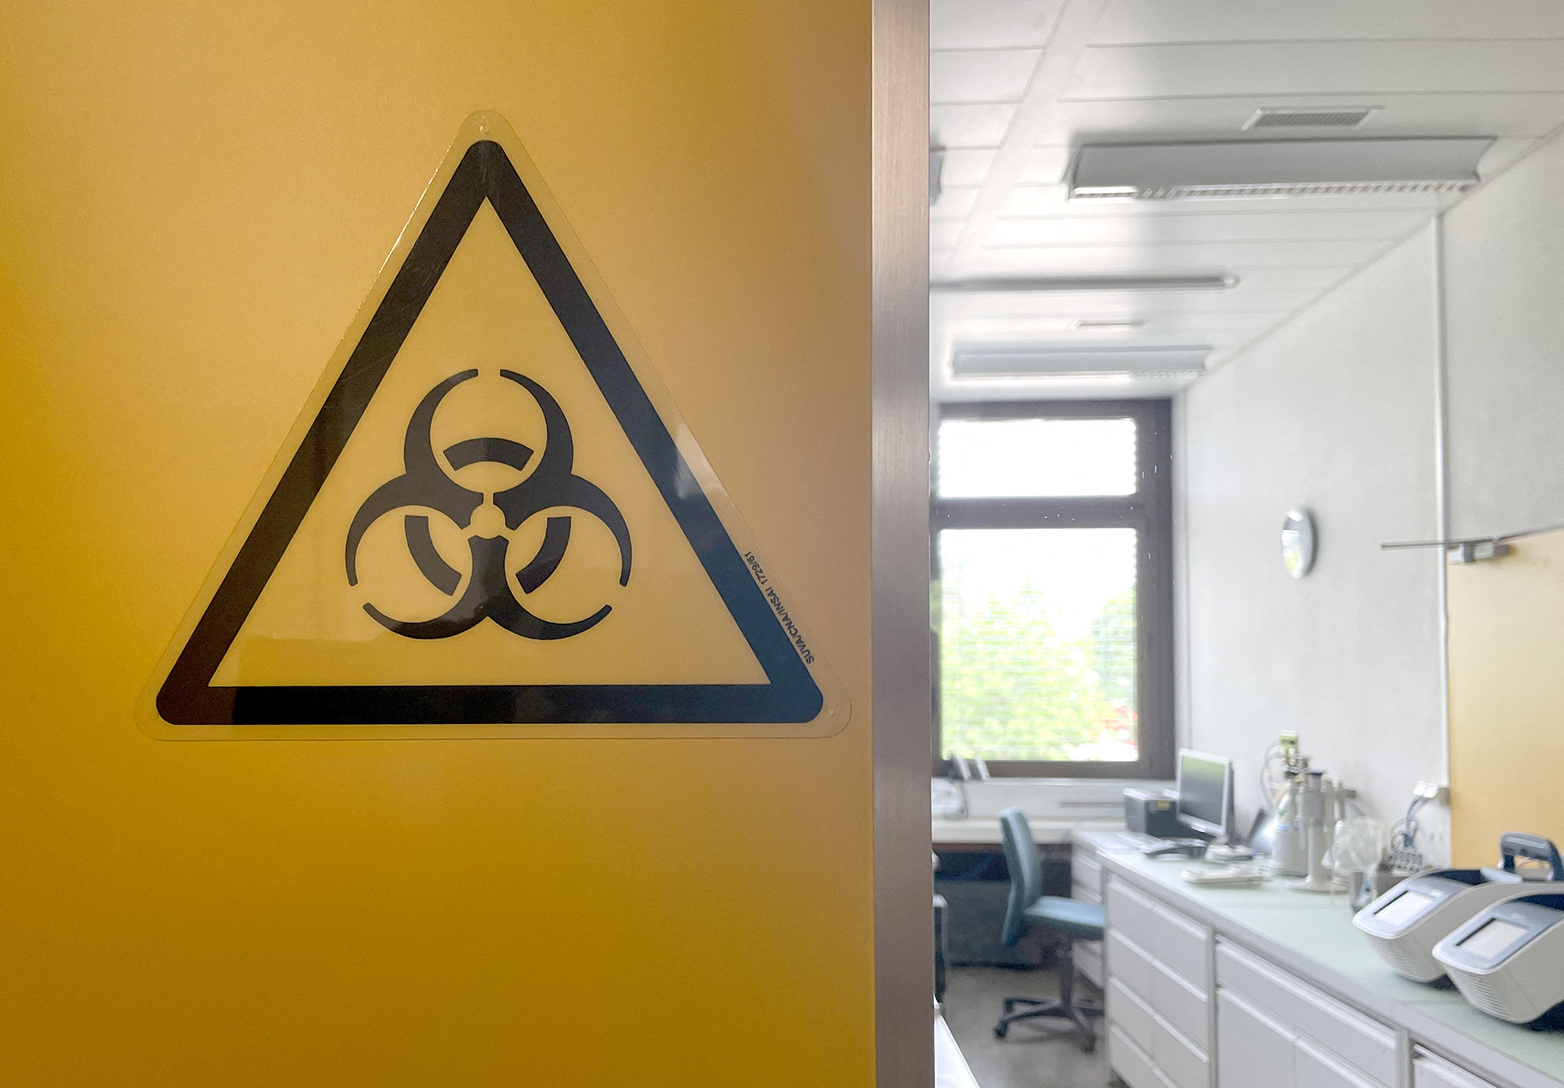 A biohazard sign